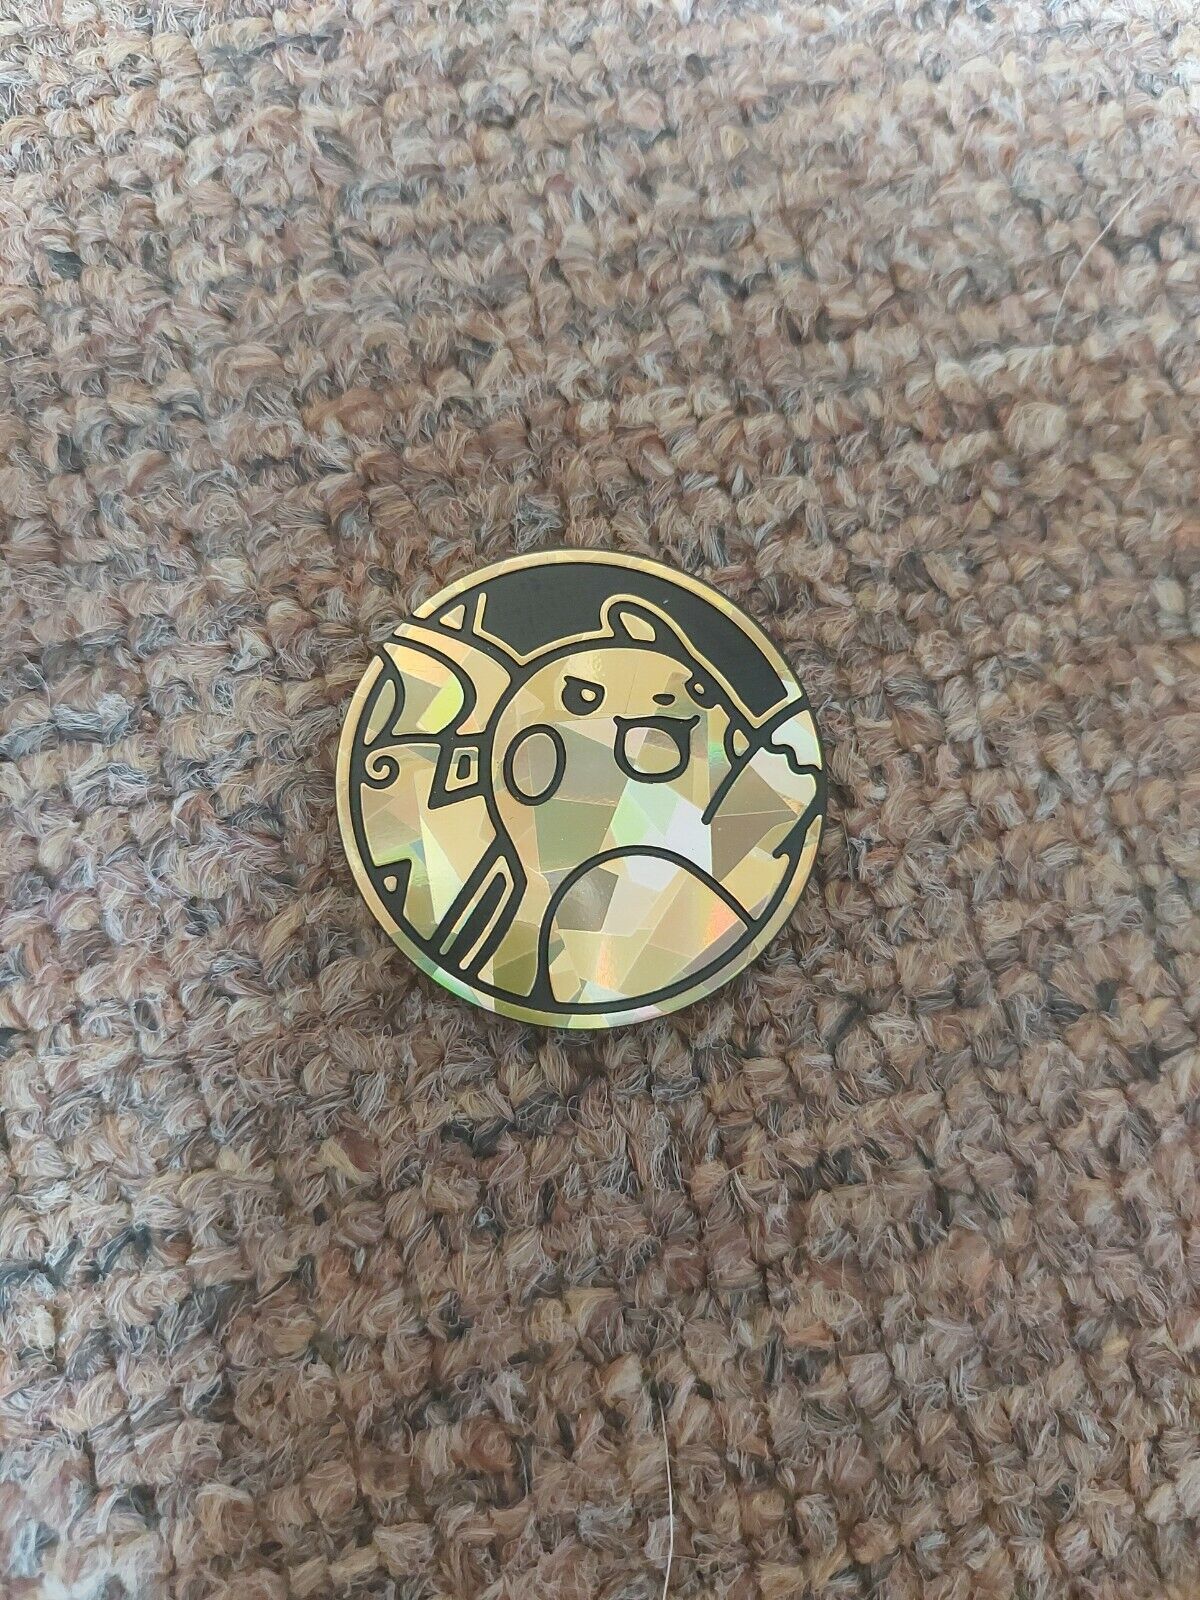 Raichu Super sale period Regular store limited Pokemon Coin Flipping TCG Gold